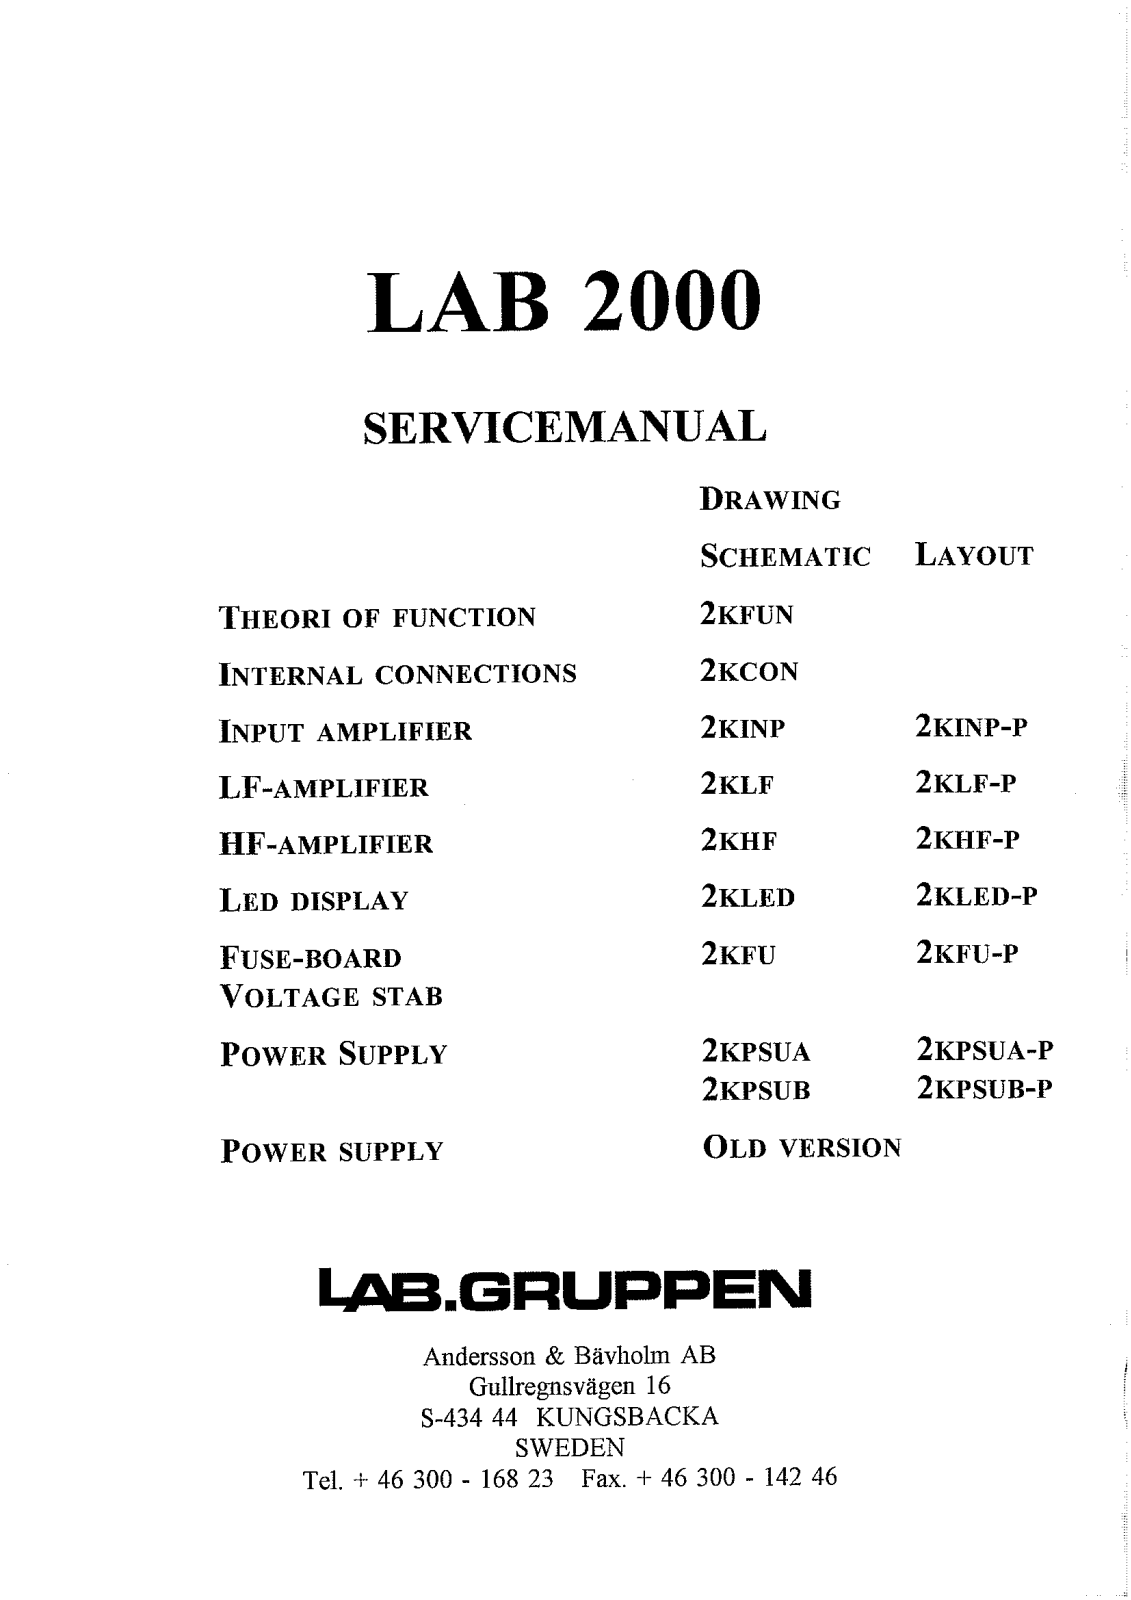 LAB Gruppen LAB-2000 Service manual